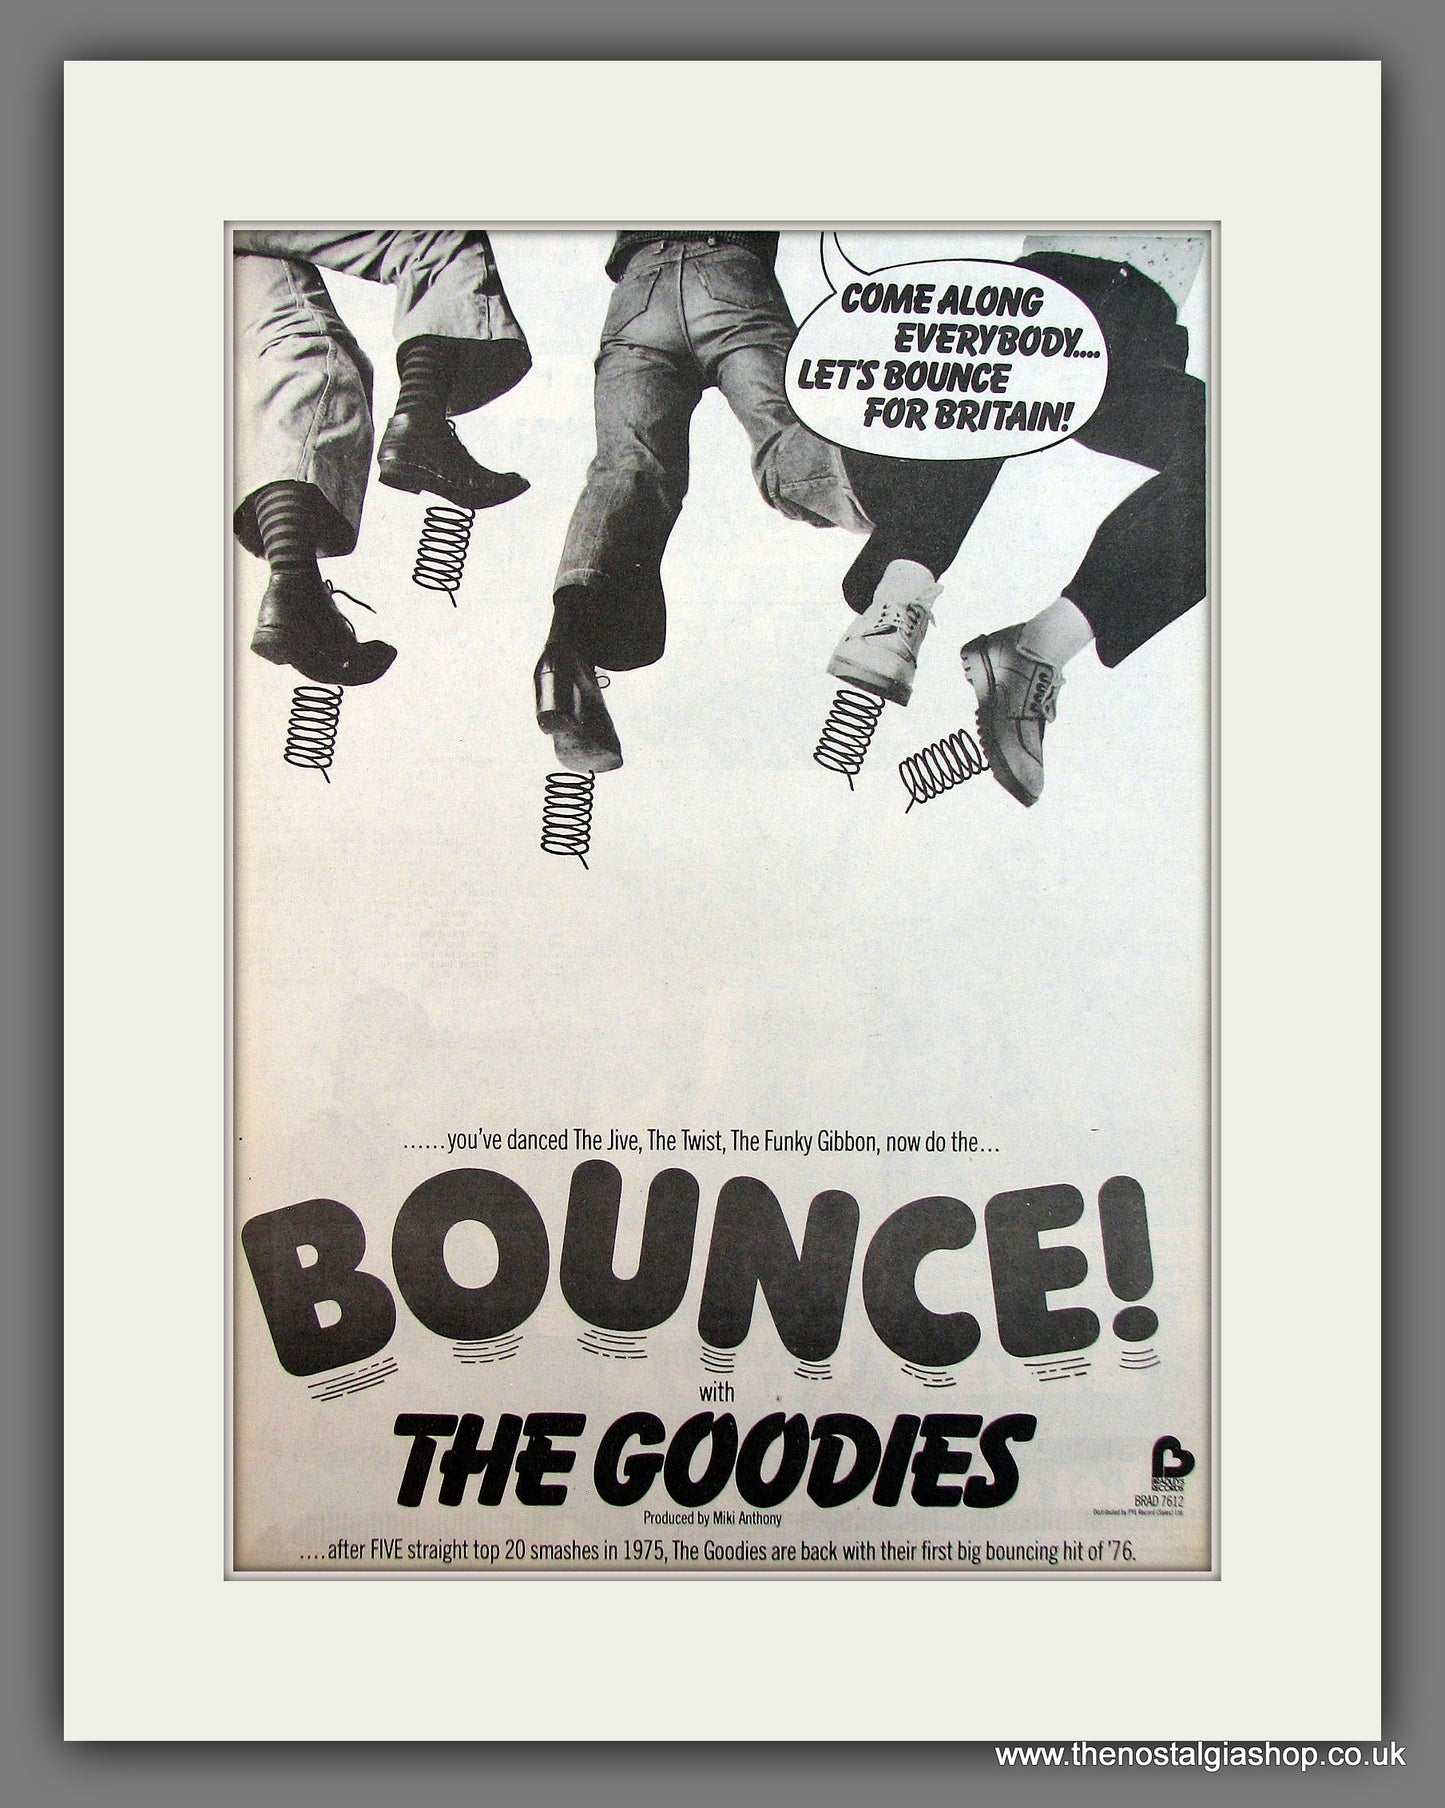 Goodies (The) Bounce. Original Vintage Advert 1976 (ref AD13467)